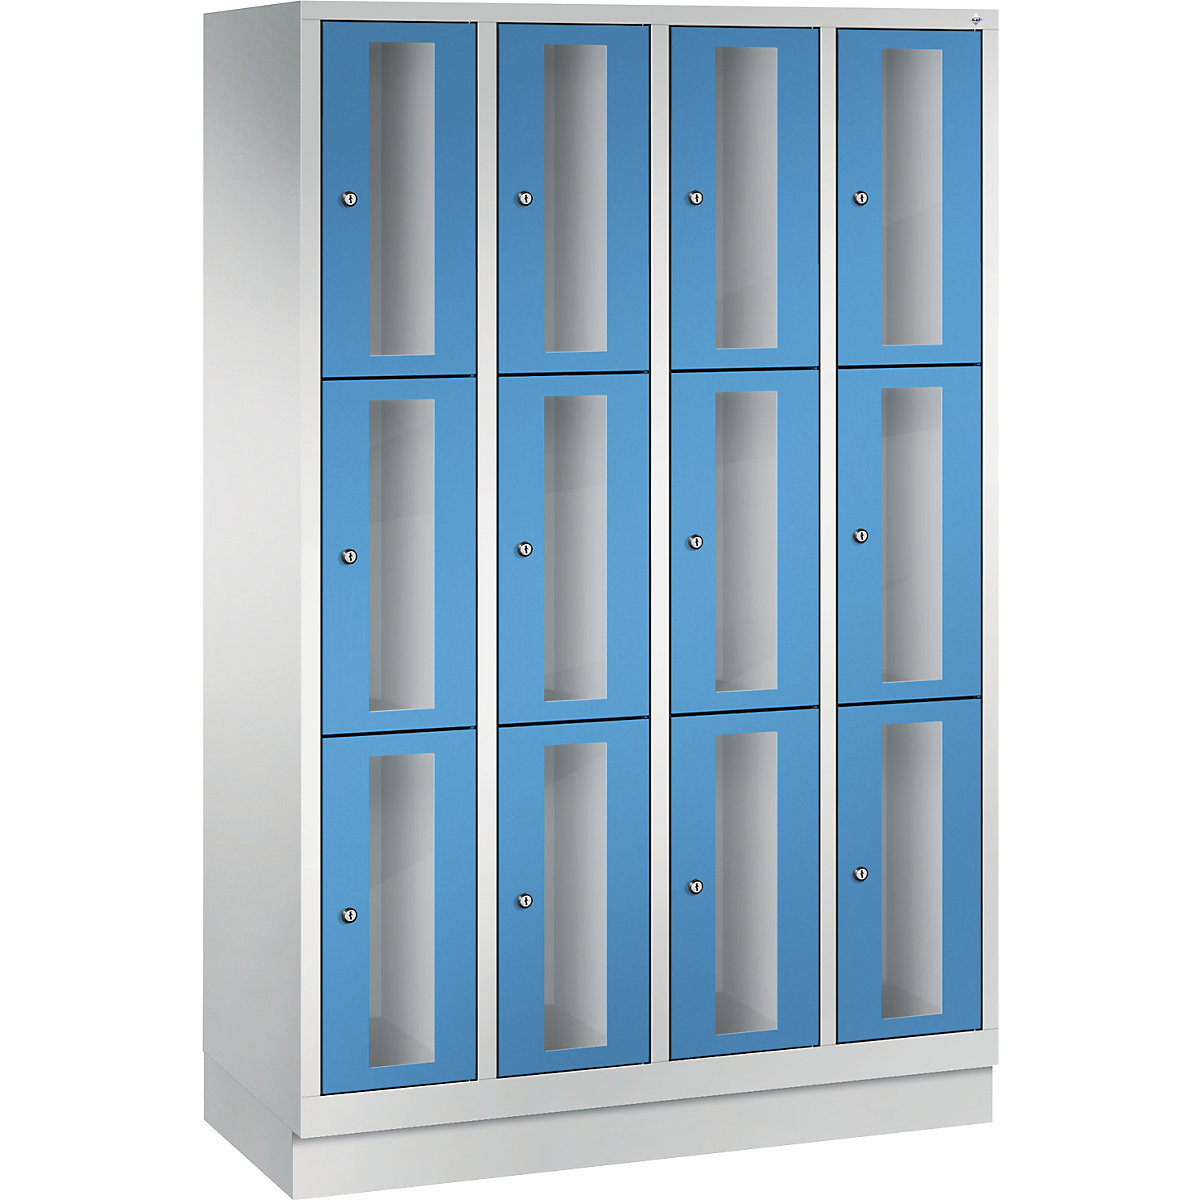 C+P – Armario de compartimentos CLASSIC, altura de compartimento 510 mm, con zócalo, 12 compartimentos de 1190 mm de anchura, puerta en azul luminoso